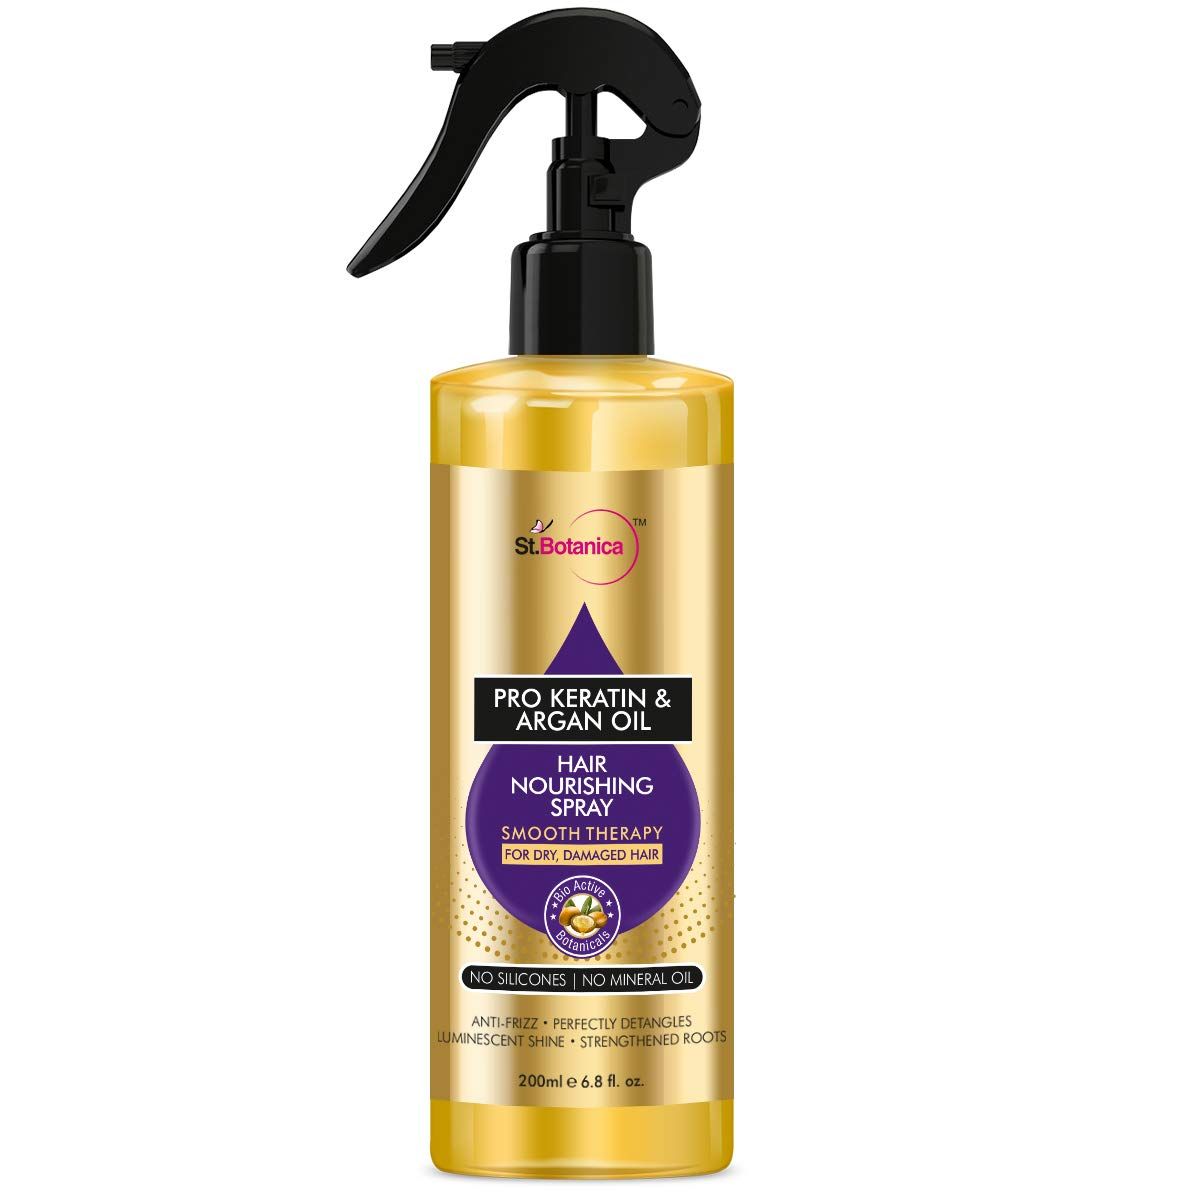 St.Botanica Pro Keratin & Argan Oil Hair Nourishing Smooth Therapy Spray